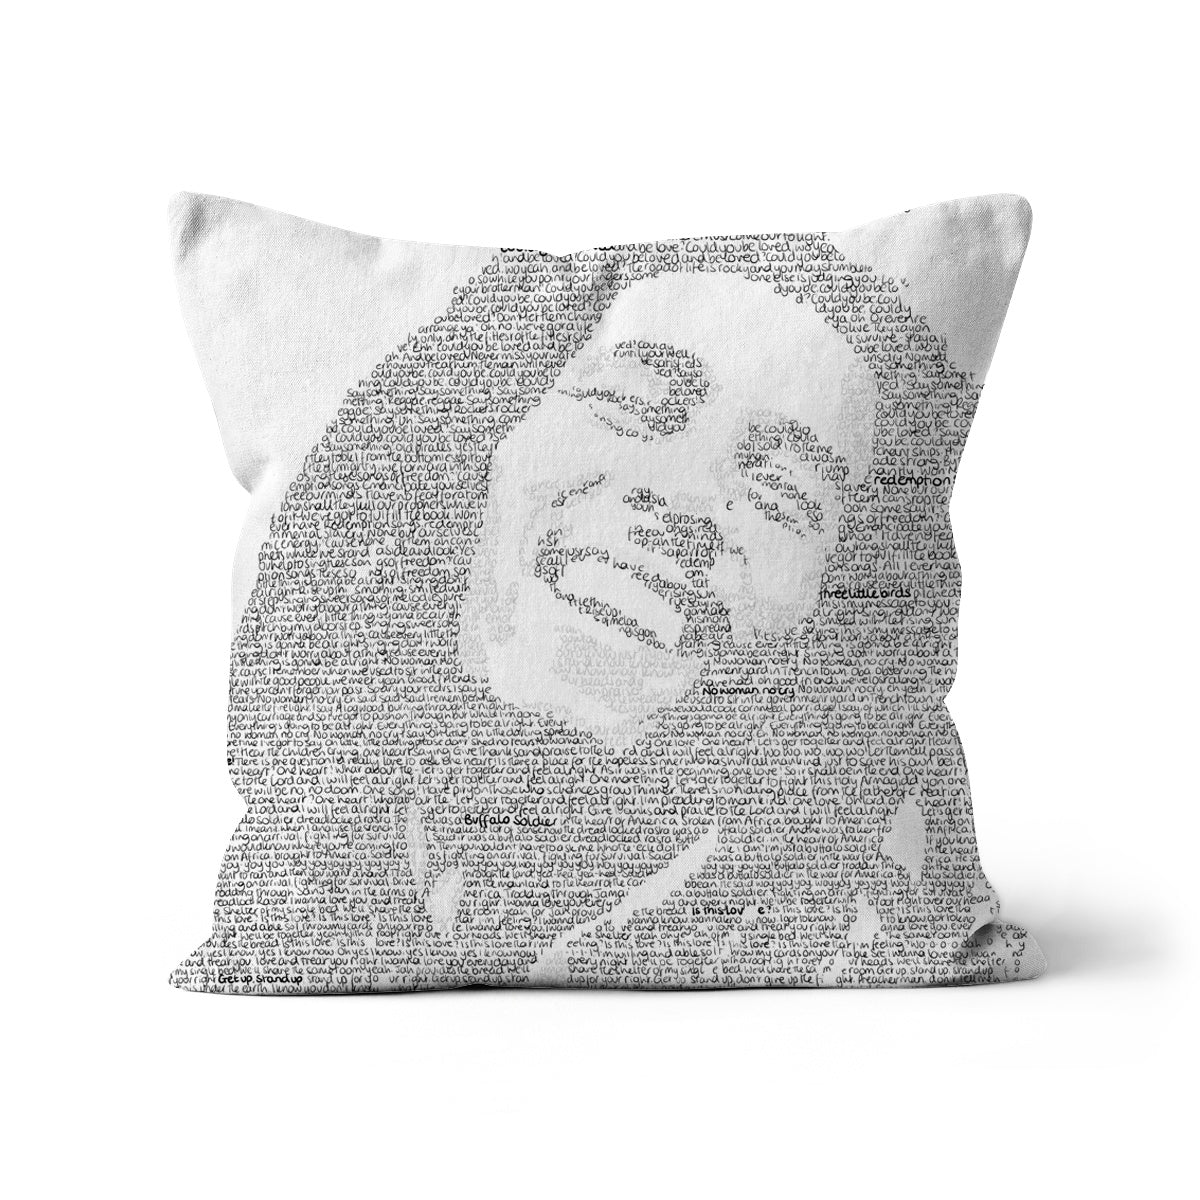 Bob Marley Cushion